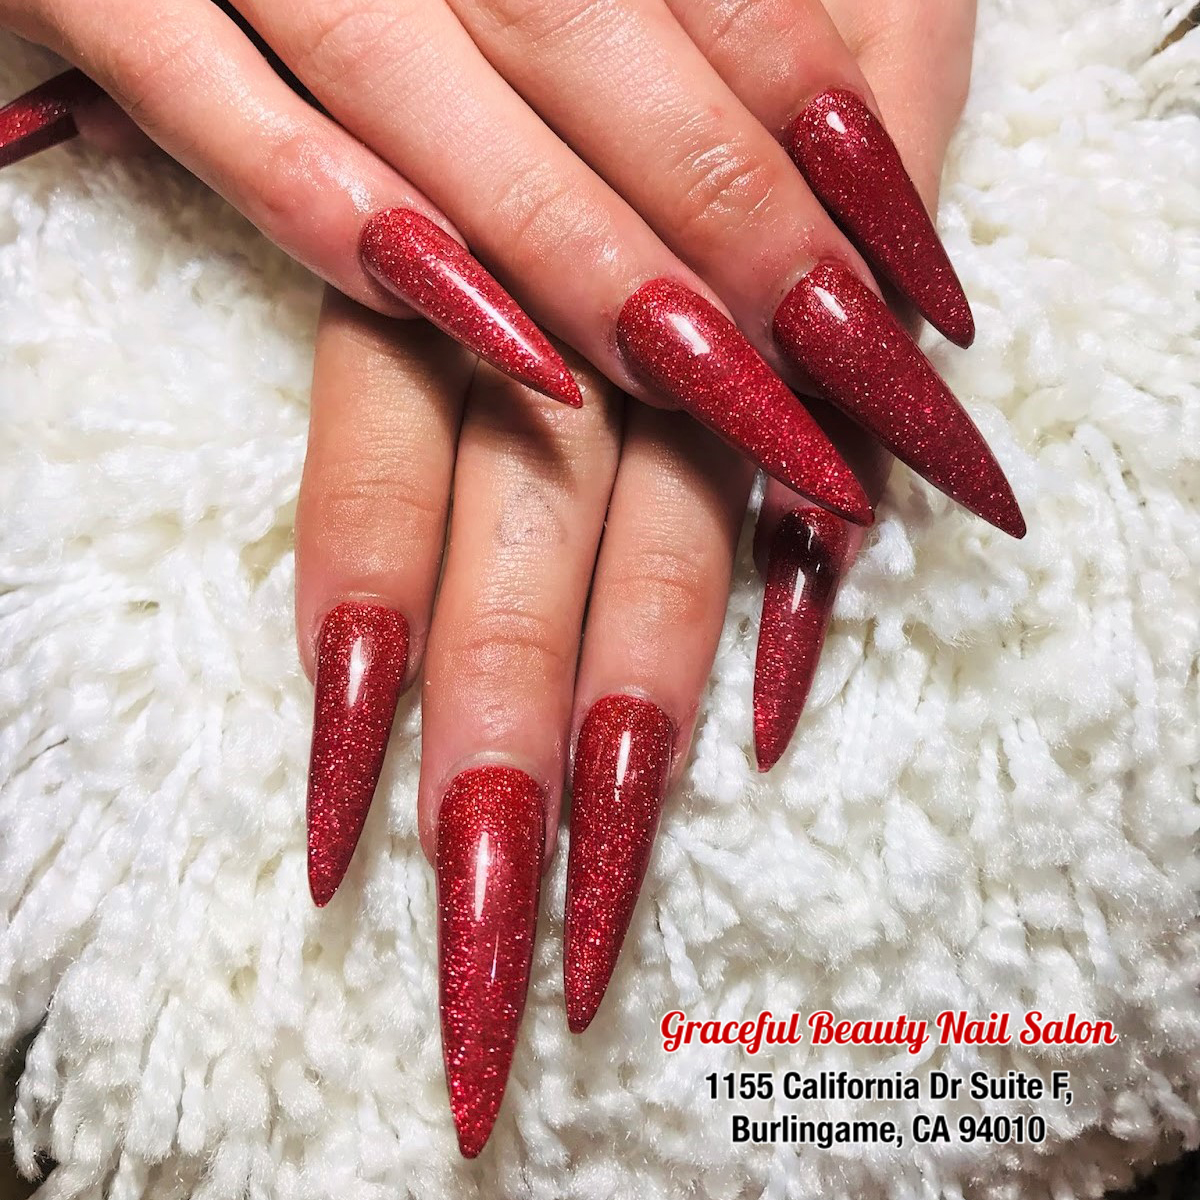 Graceful Beauty Nail Salon : New nails art for New Year 2022 | Creative